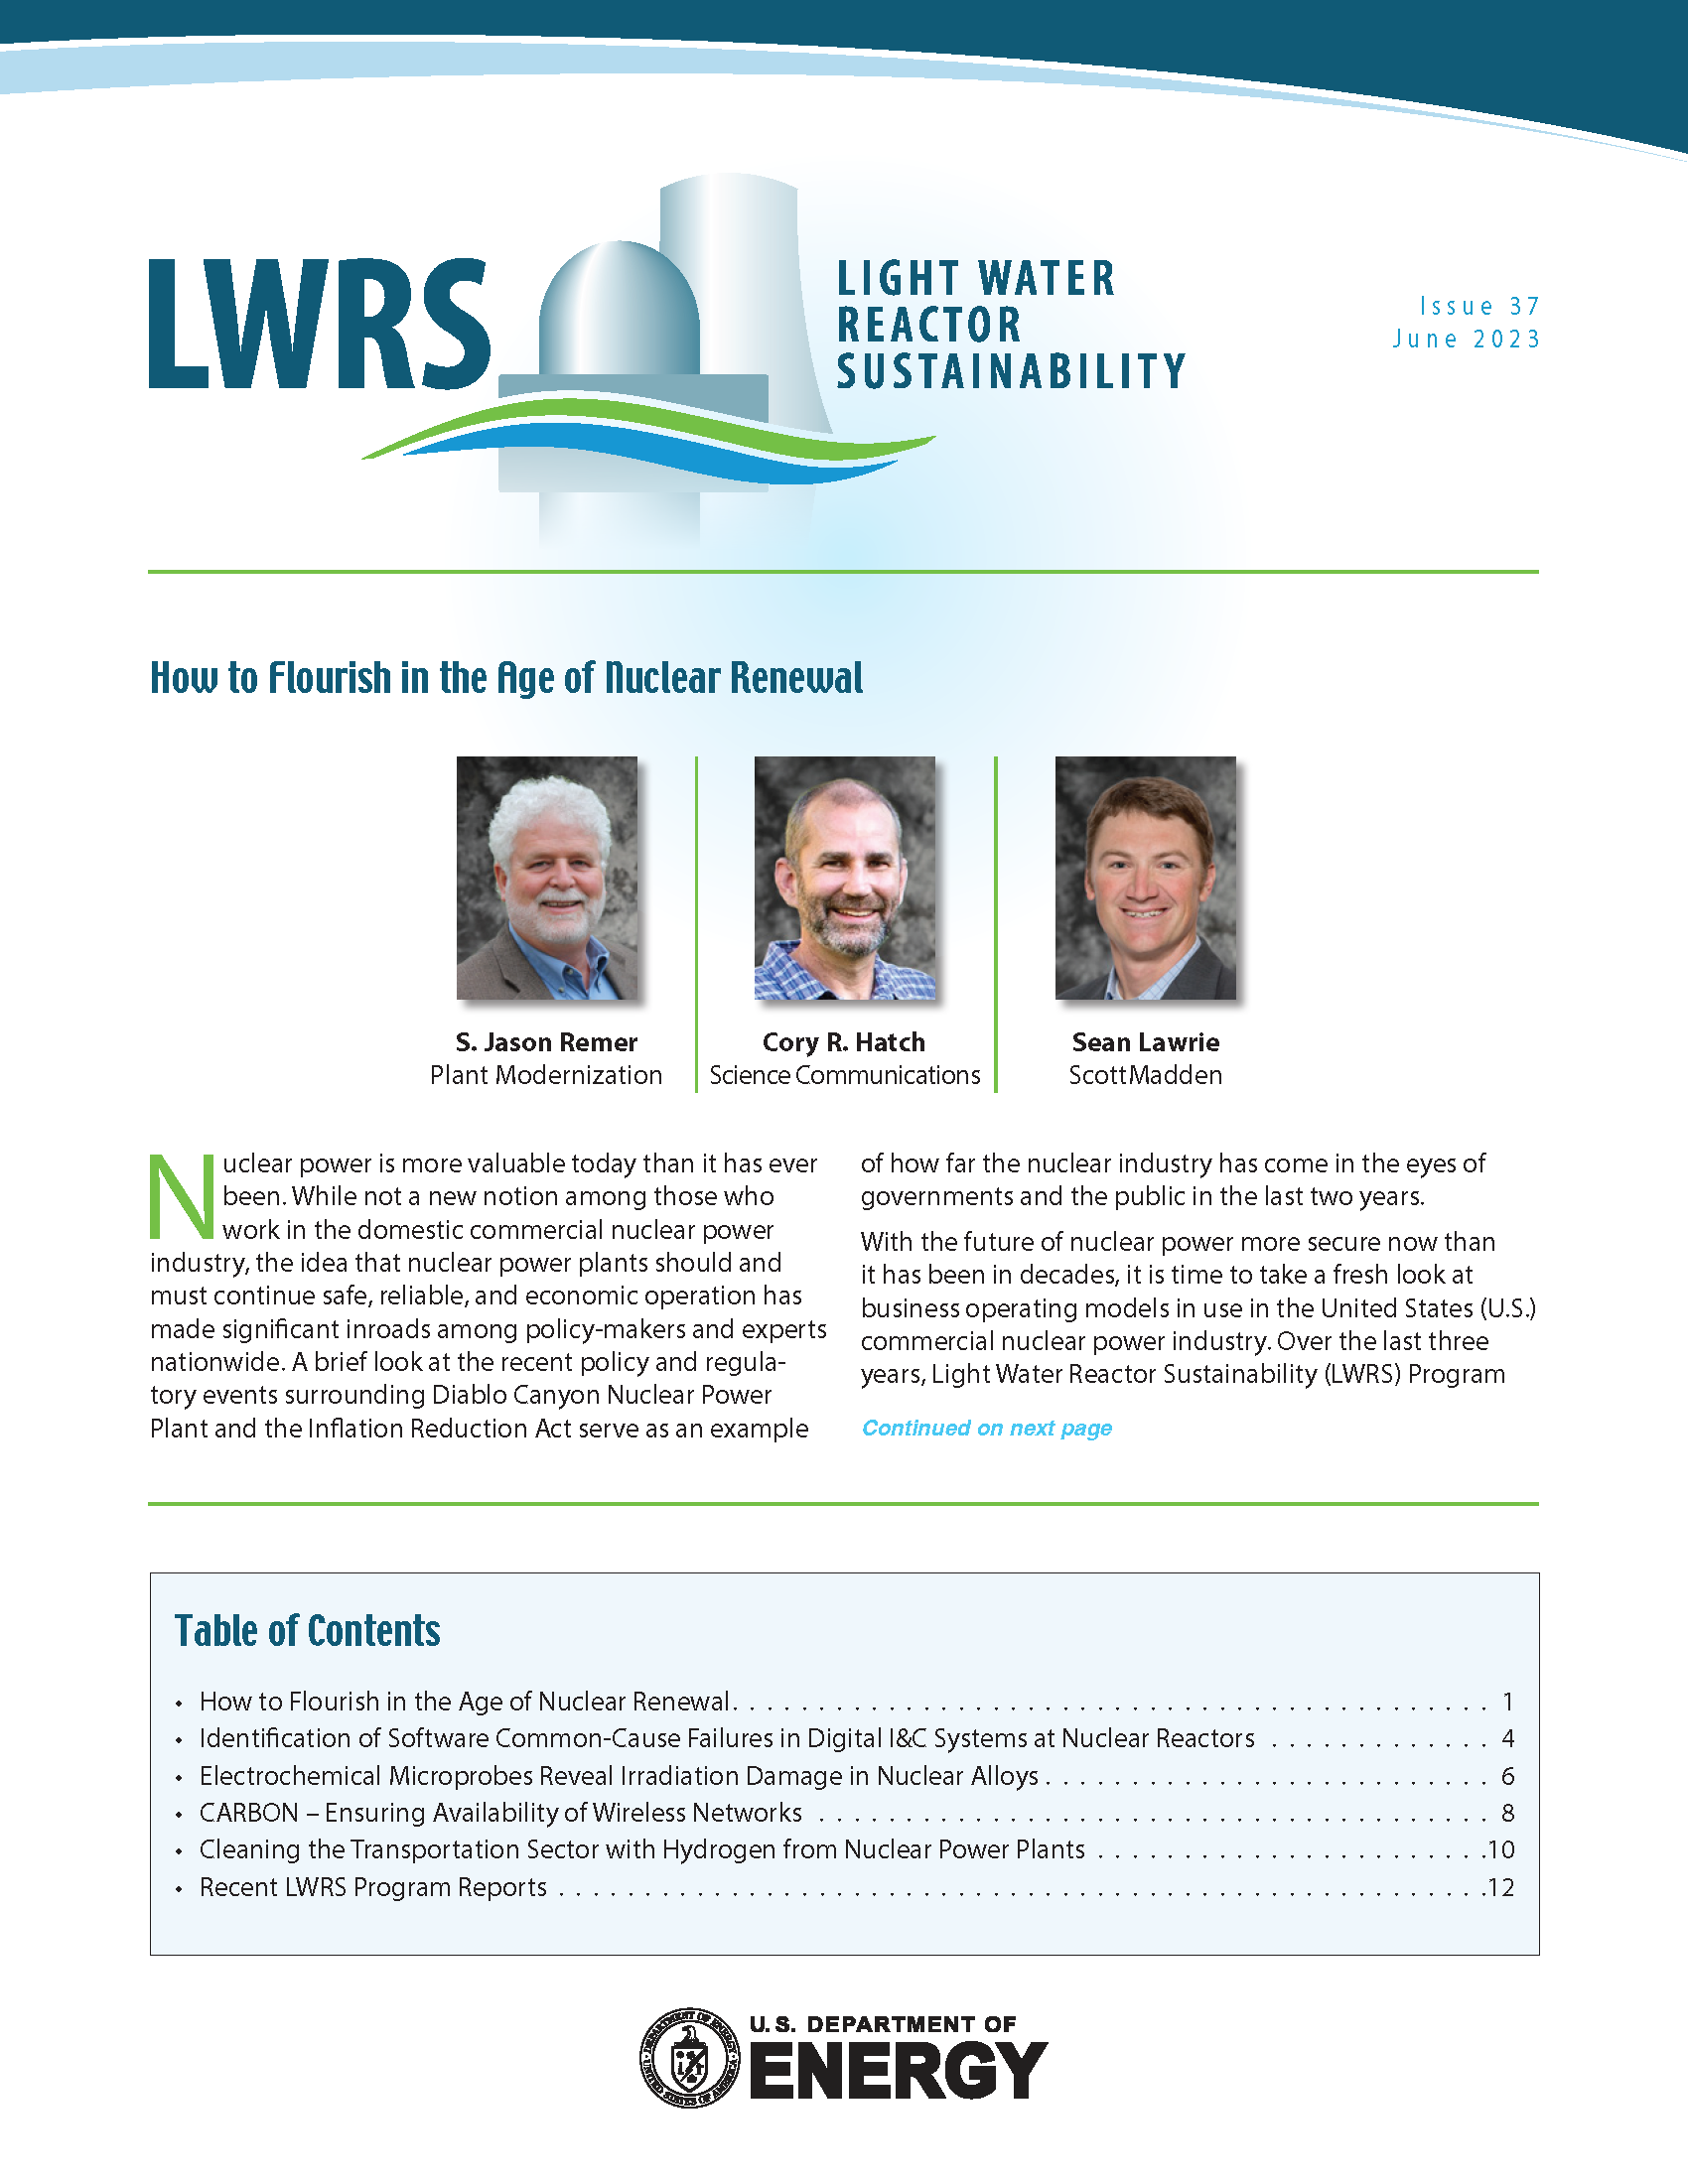  Light Water Reactor Sustainability Newsletter – Issue 37, June 2023